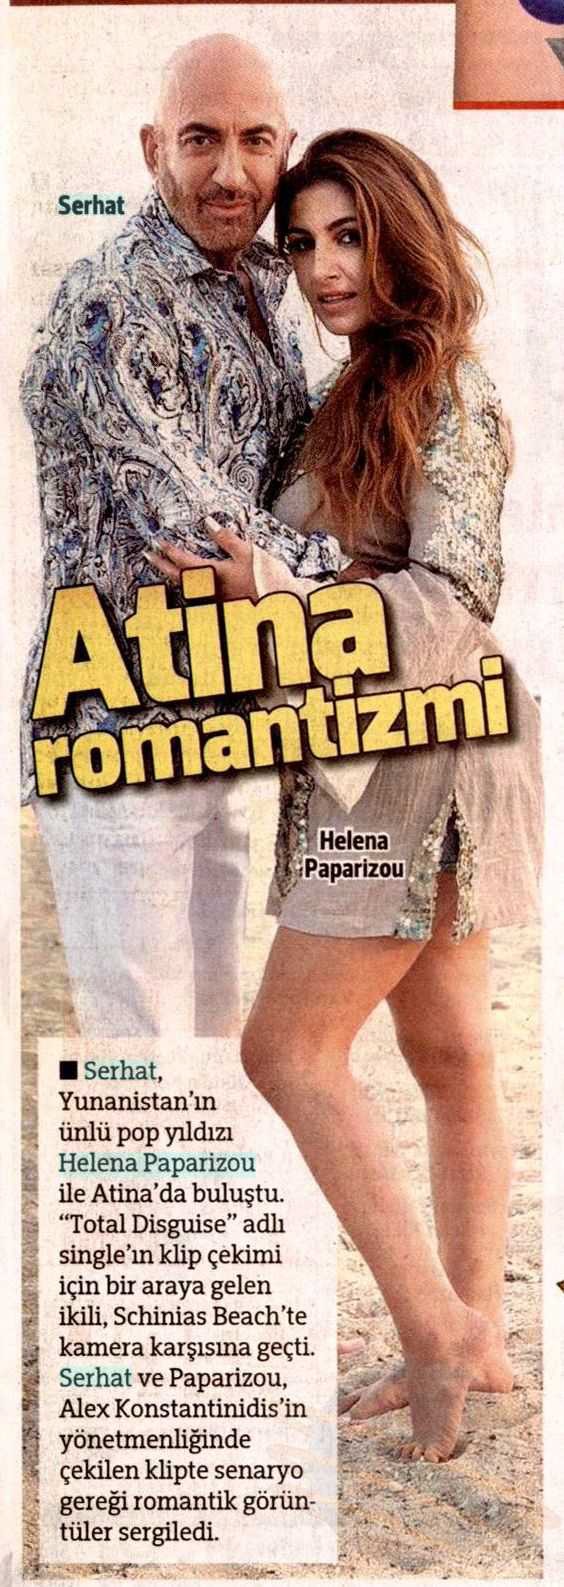 Atina romantizmi - 26.09.2018 - Hürriyet Kelebek